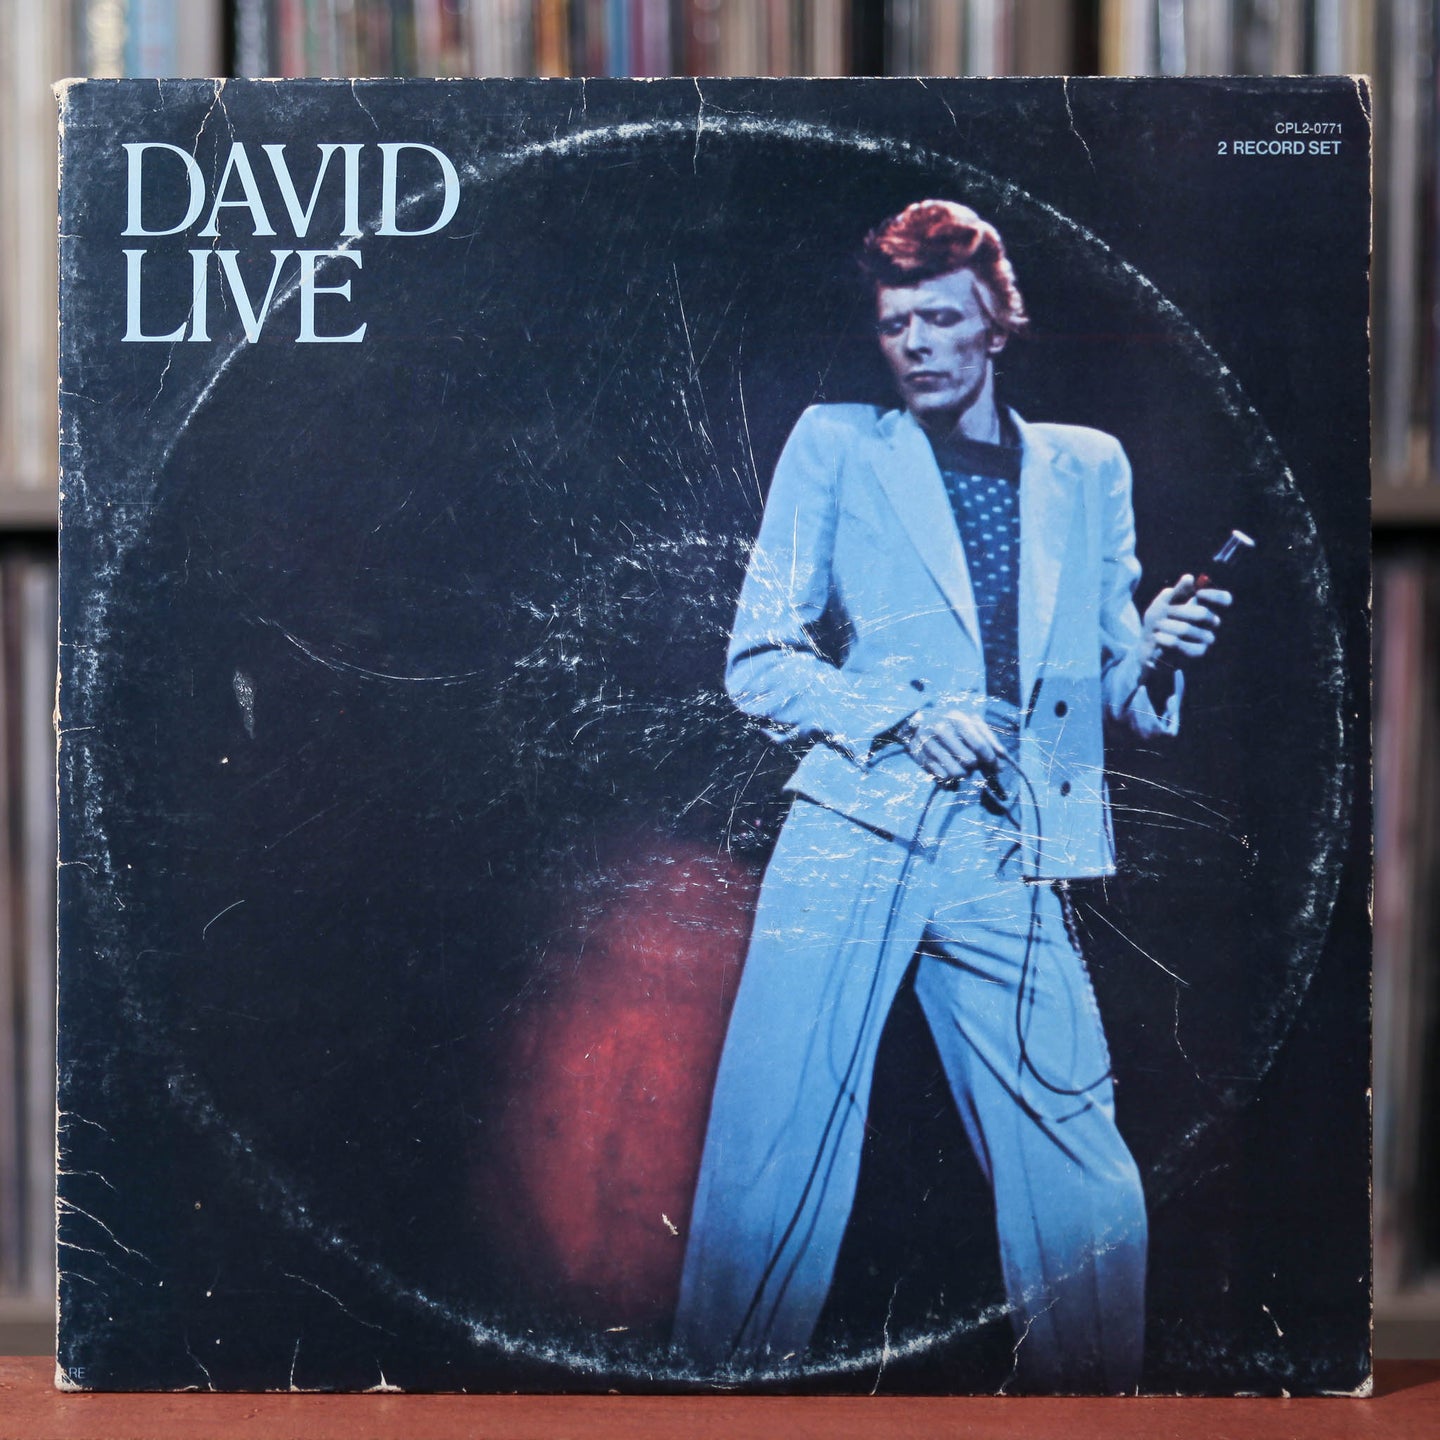 David Bowie - David Live - 2LP - 1974 RCA Victor - VG/VG+